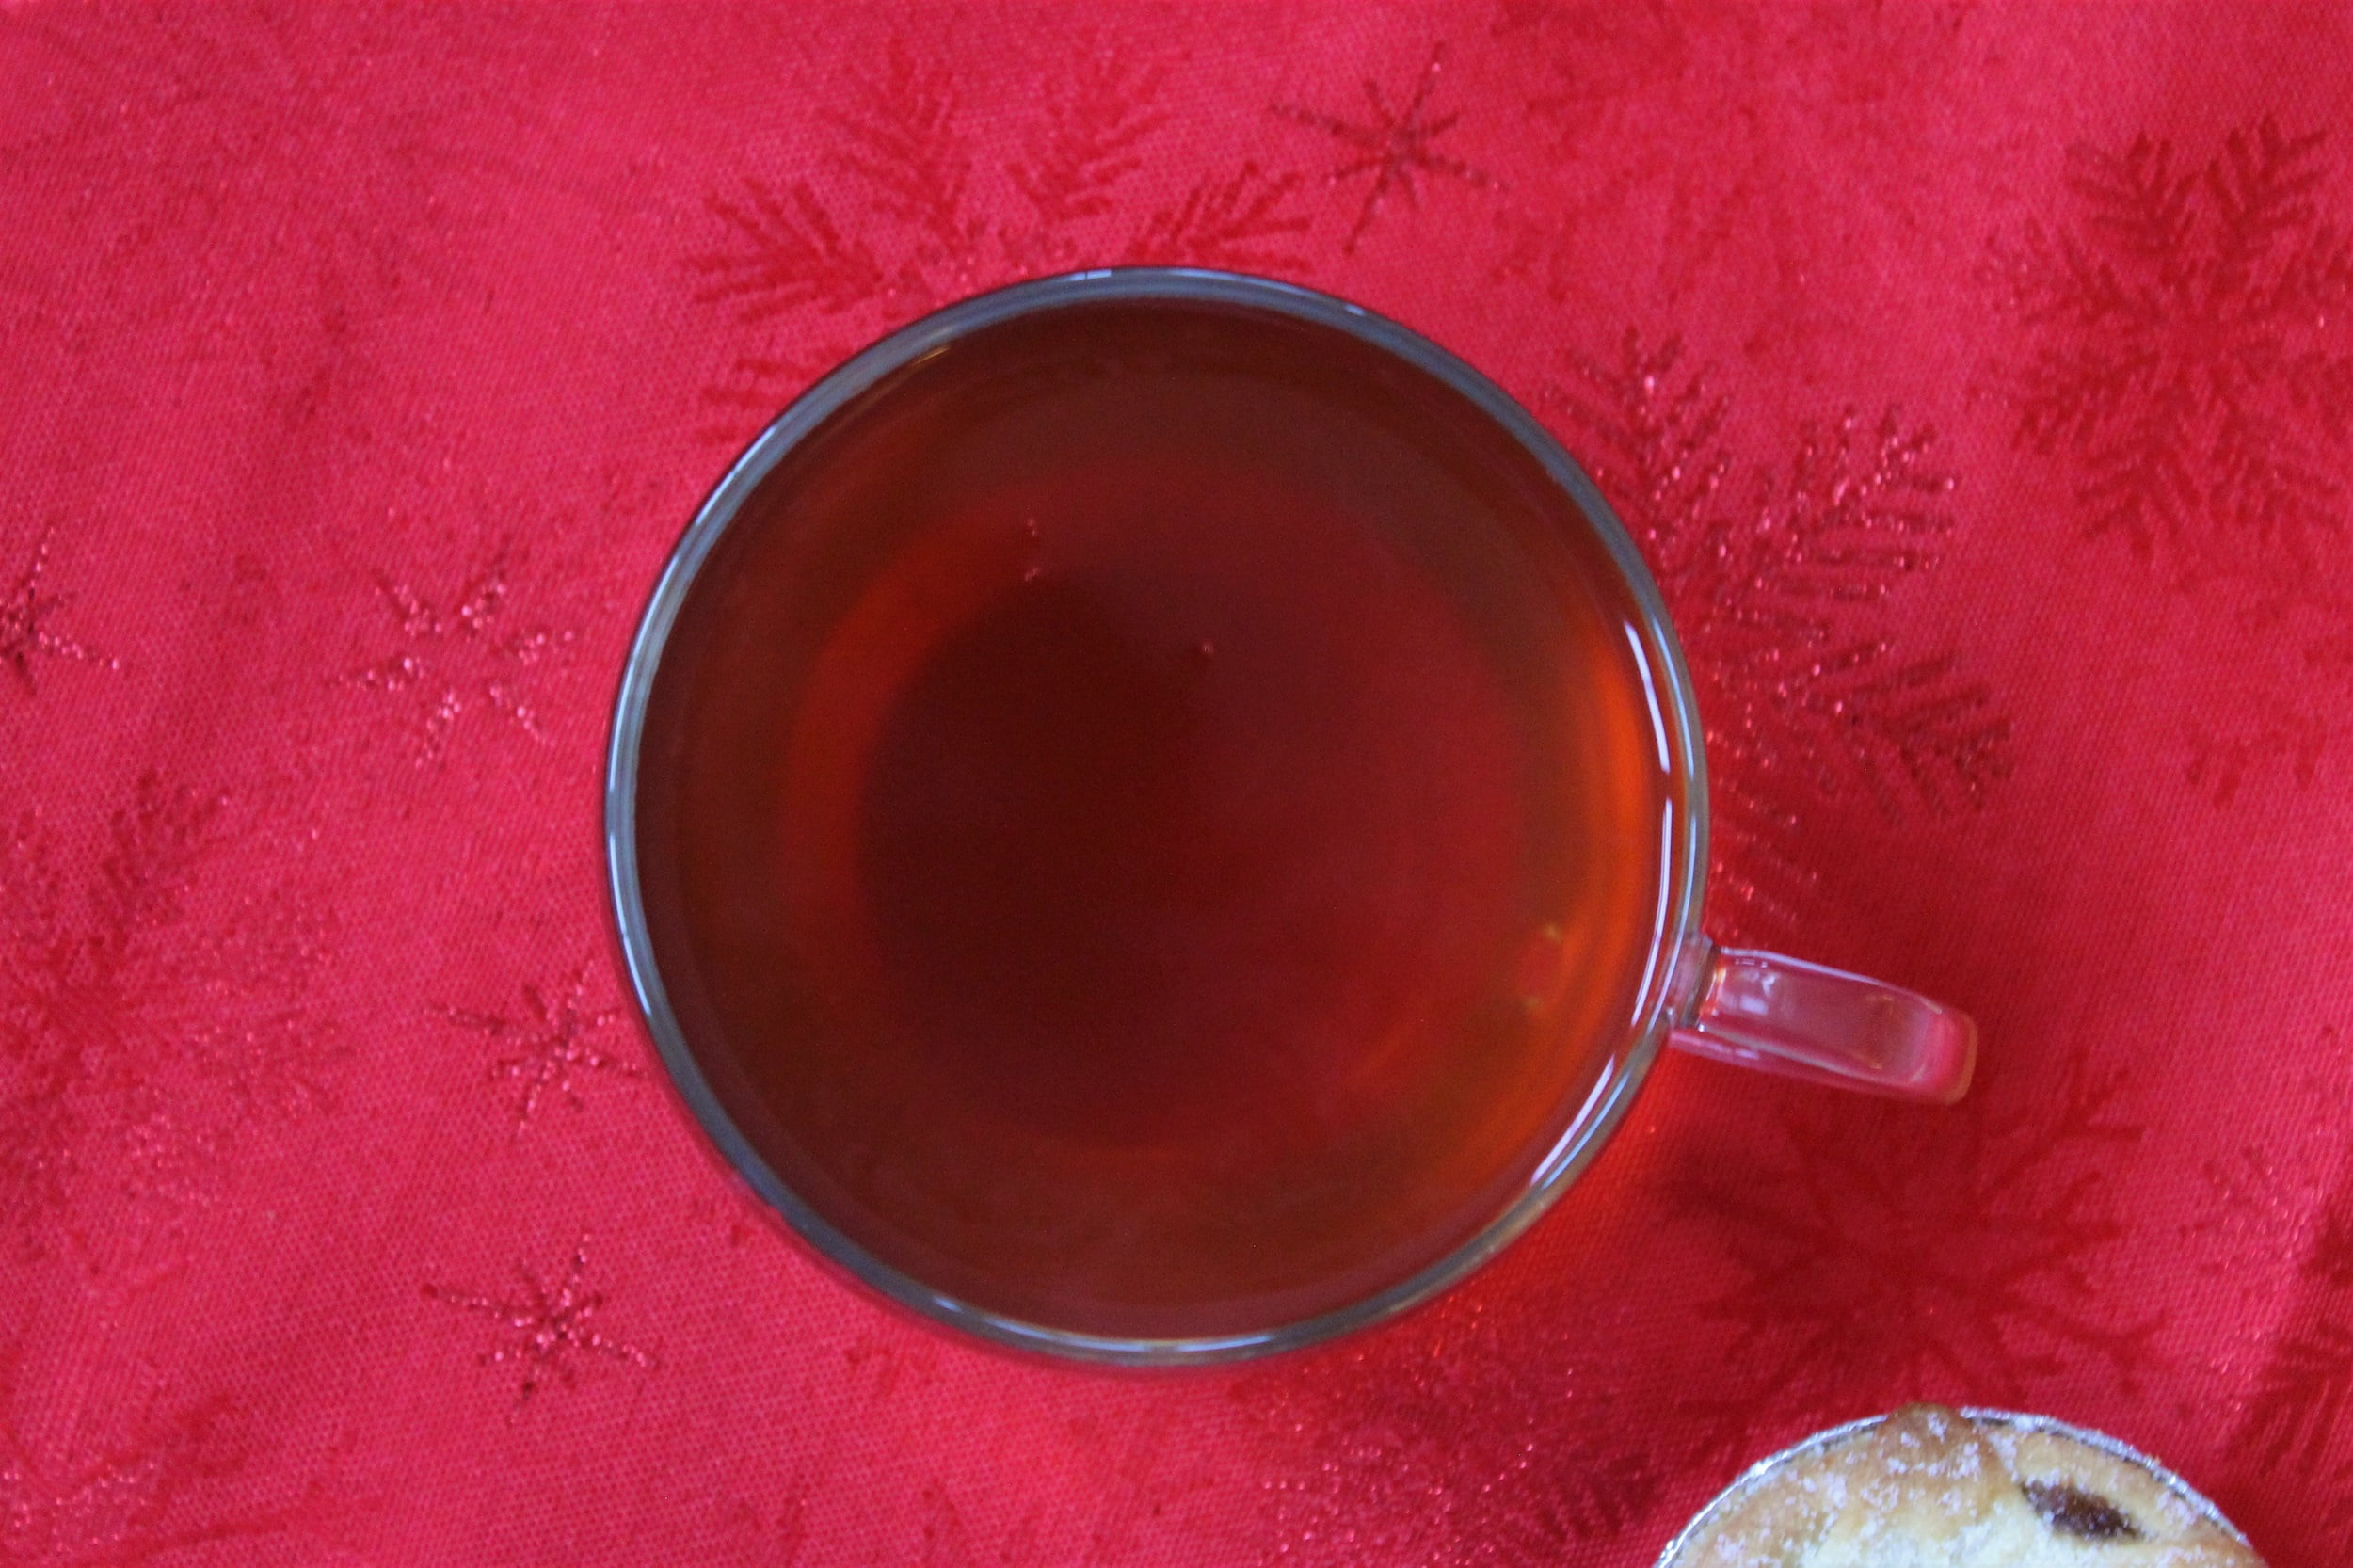 tsarevna black tea in glass teacup